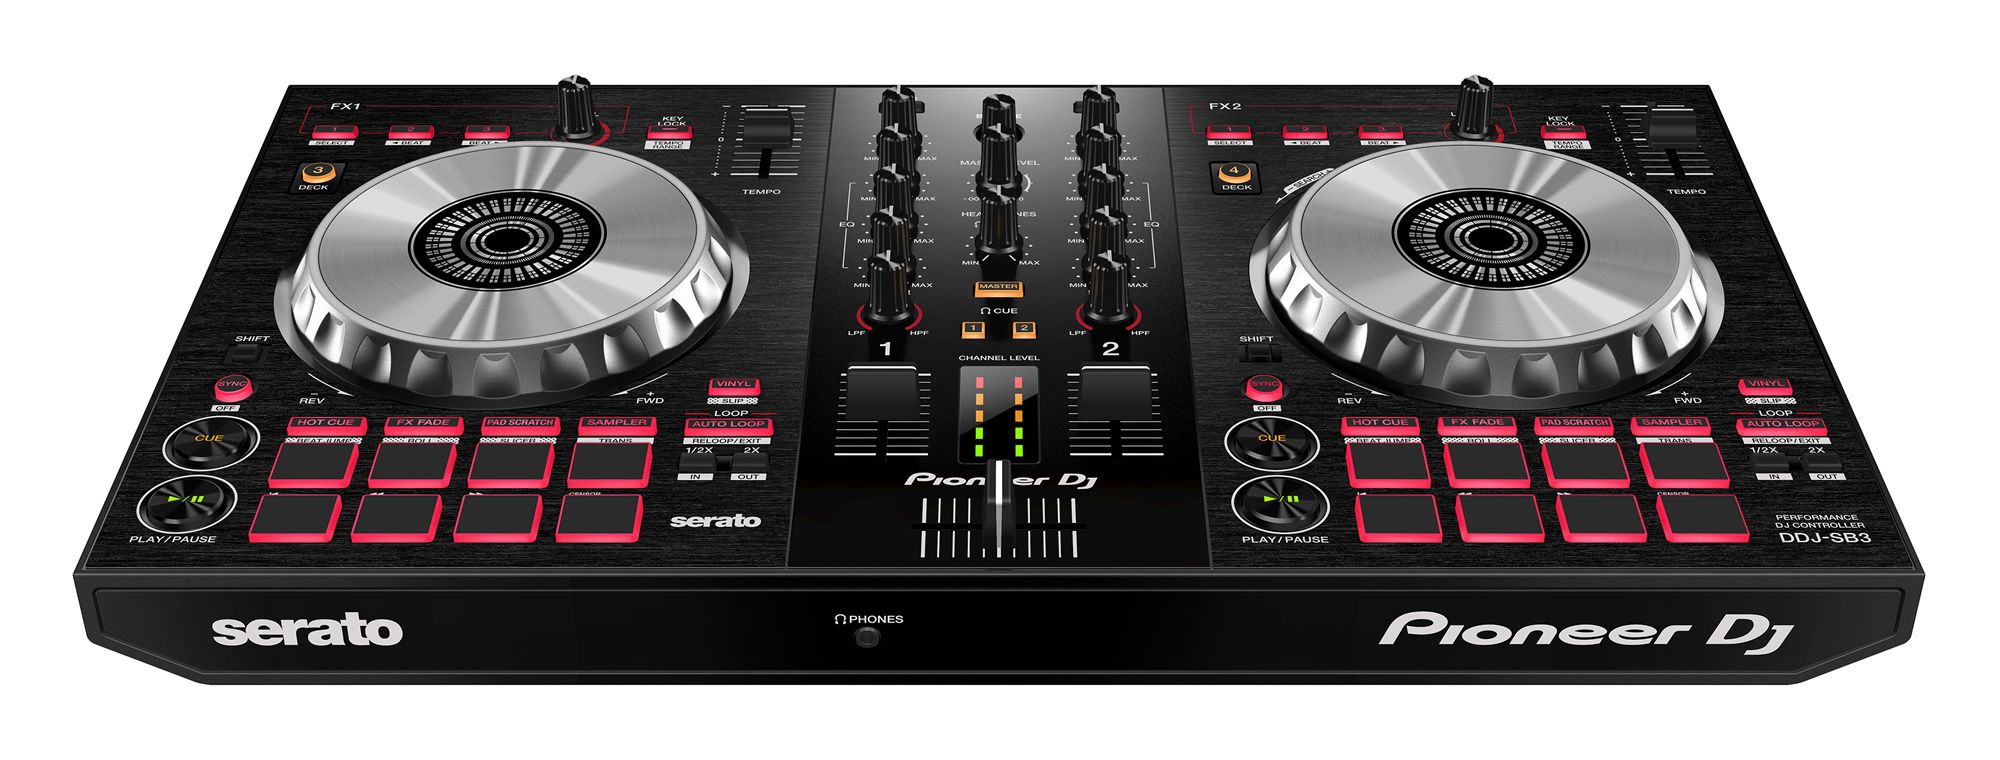 Review: Roland DJ-202 & Pioneer DDJ-400: Budget Alternatives to the DDJ-SB3?  - DJ TechTools